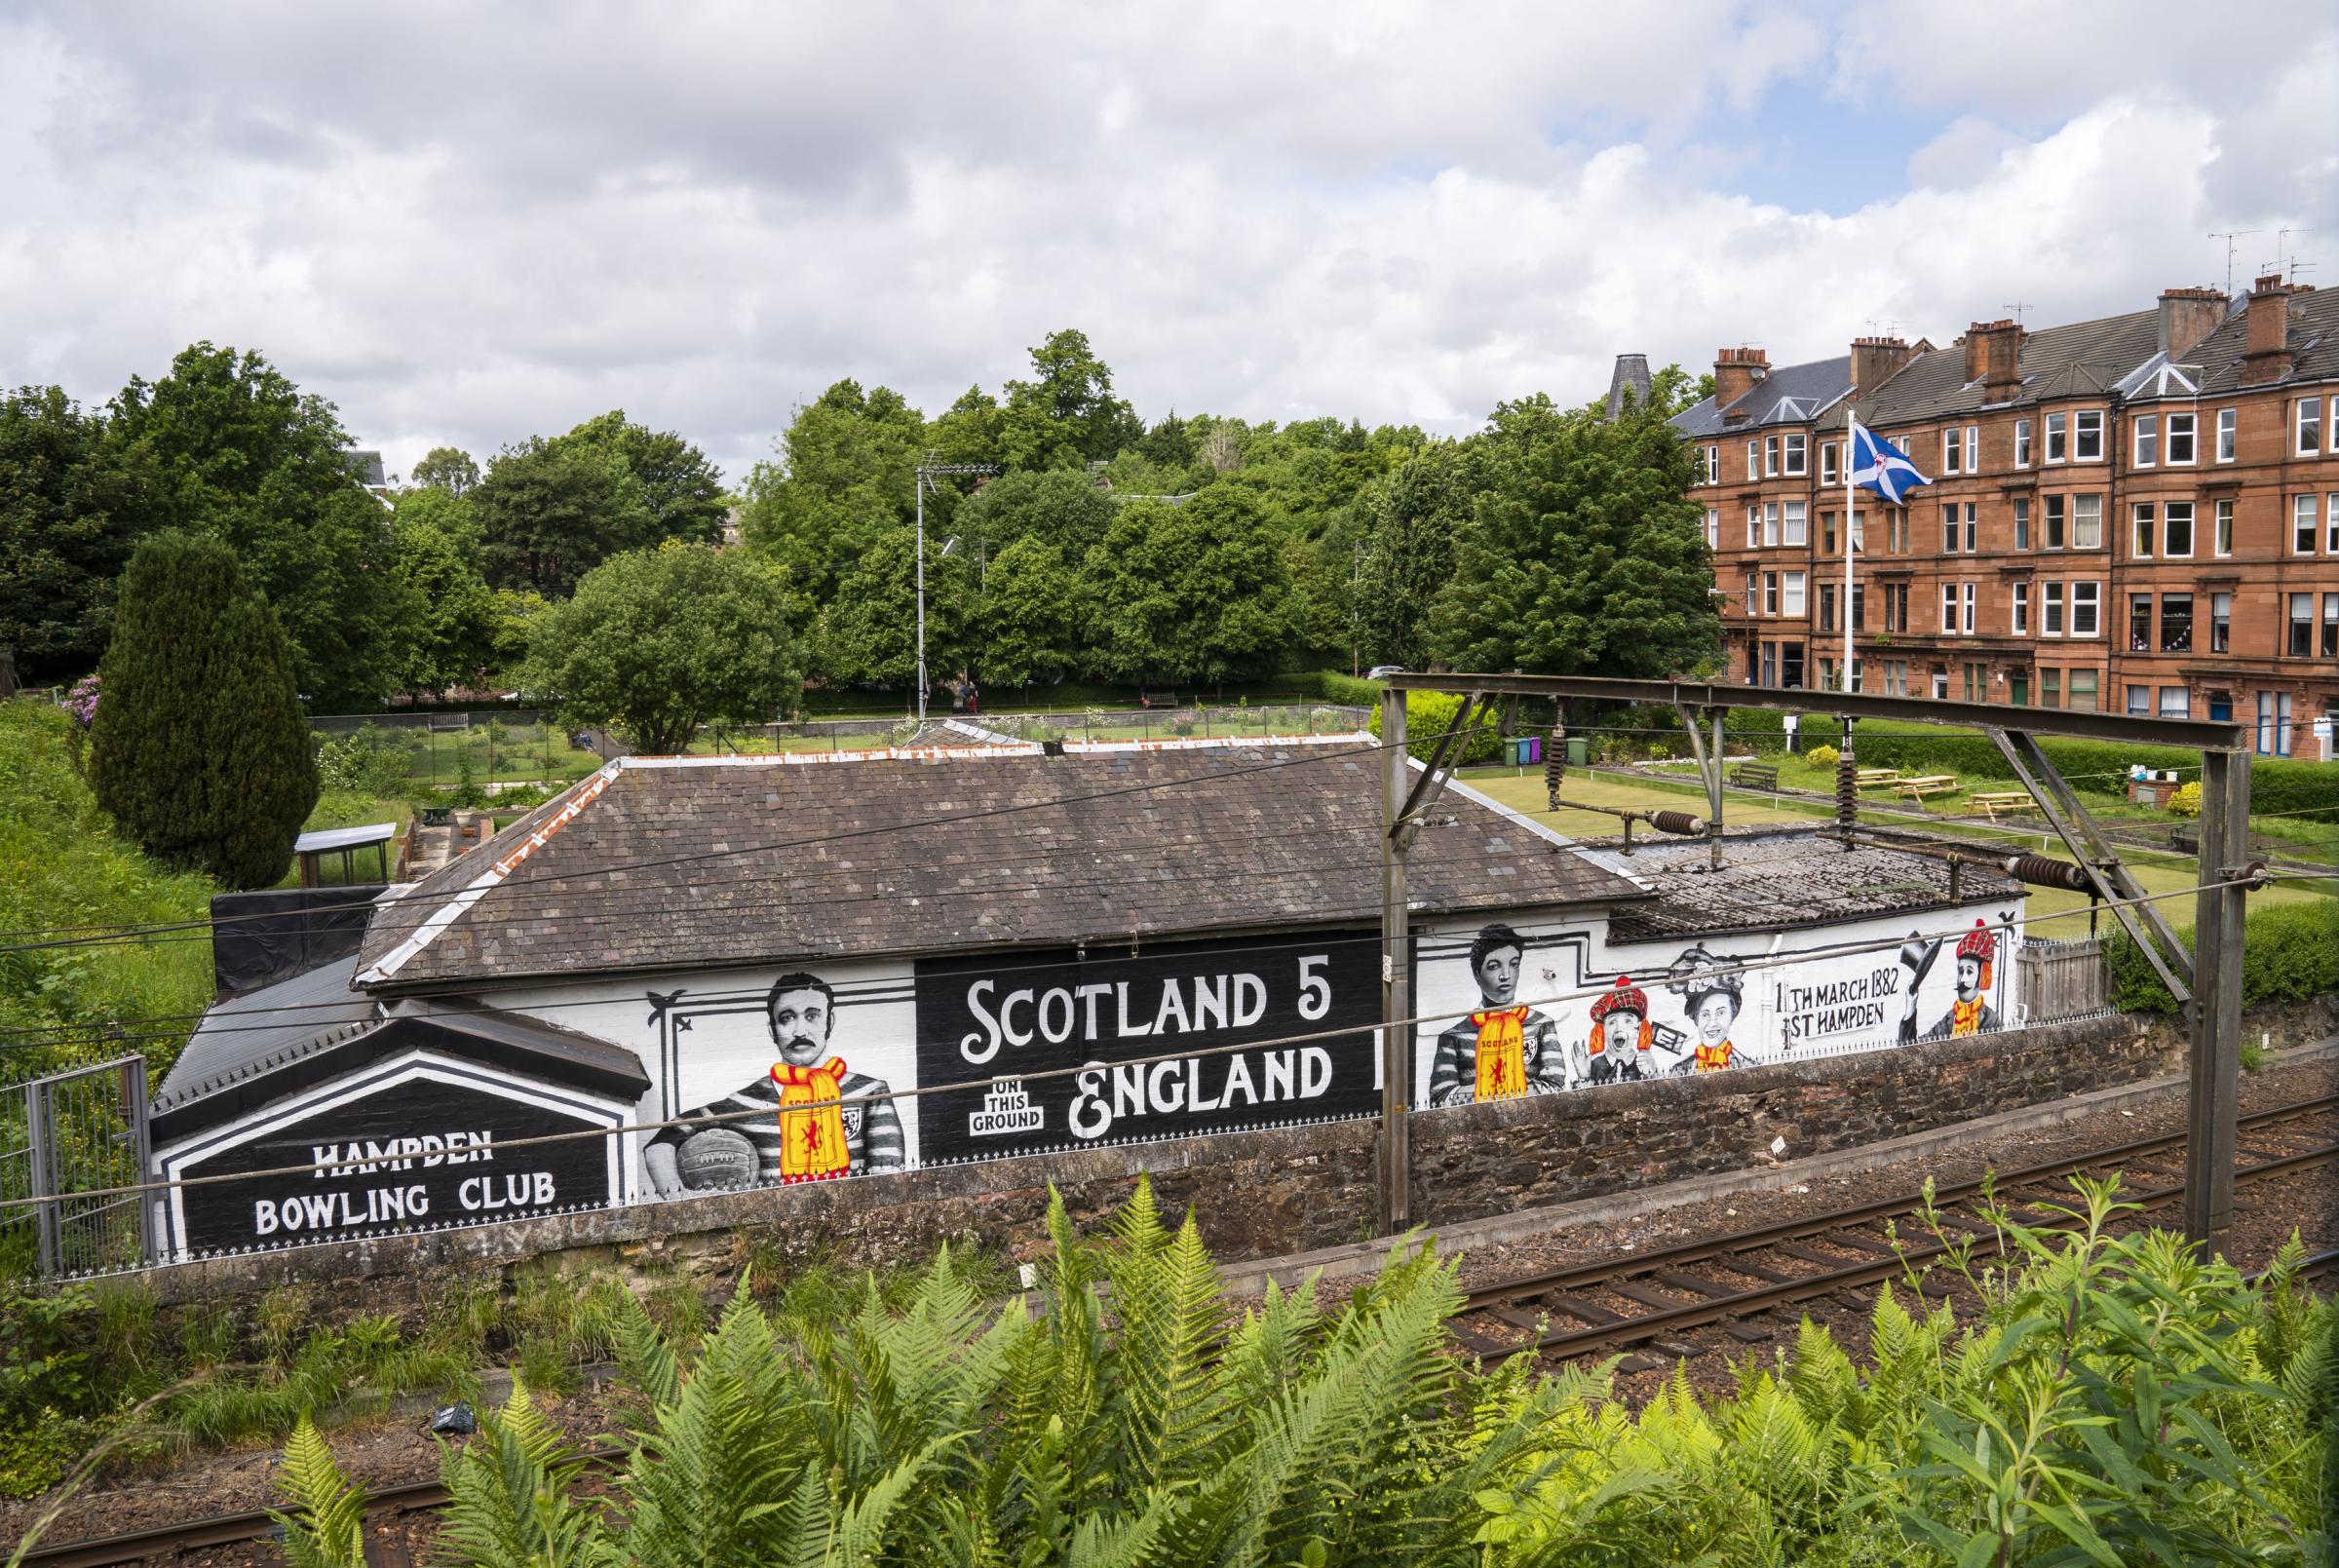 The mural at Hampden Bowling Club, Glasgow, site of the original Hampden Park.